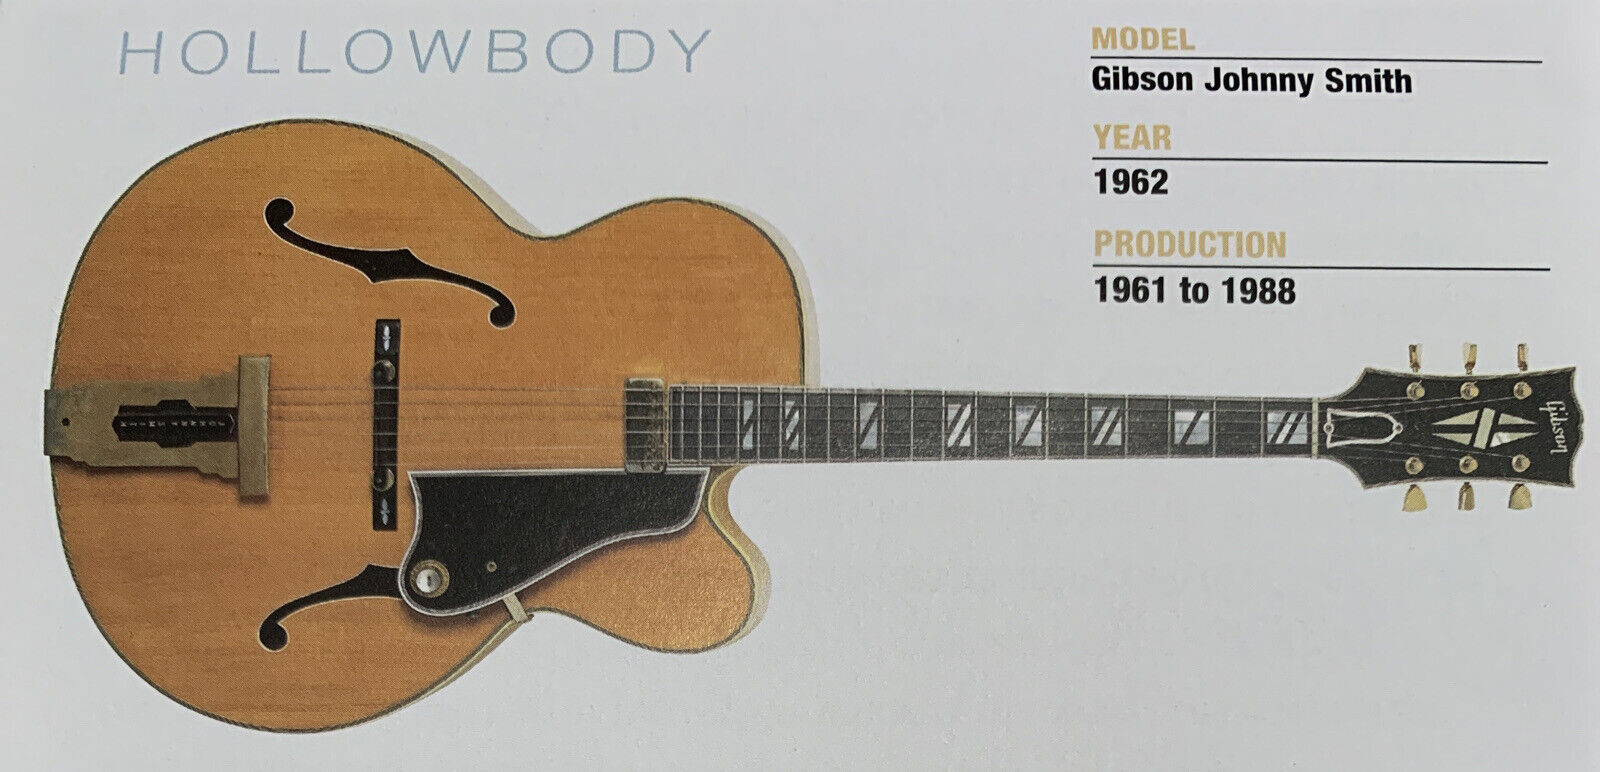 1962 Gibson Johnny Smith Hollow Body Guitar Fridge Magnet 5.25"x2.75" NEW - $3.84